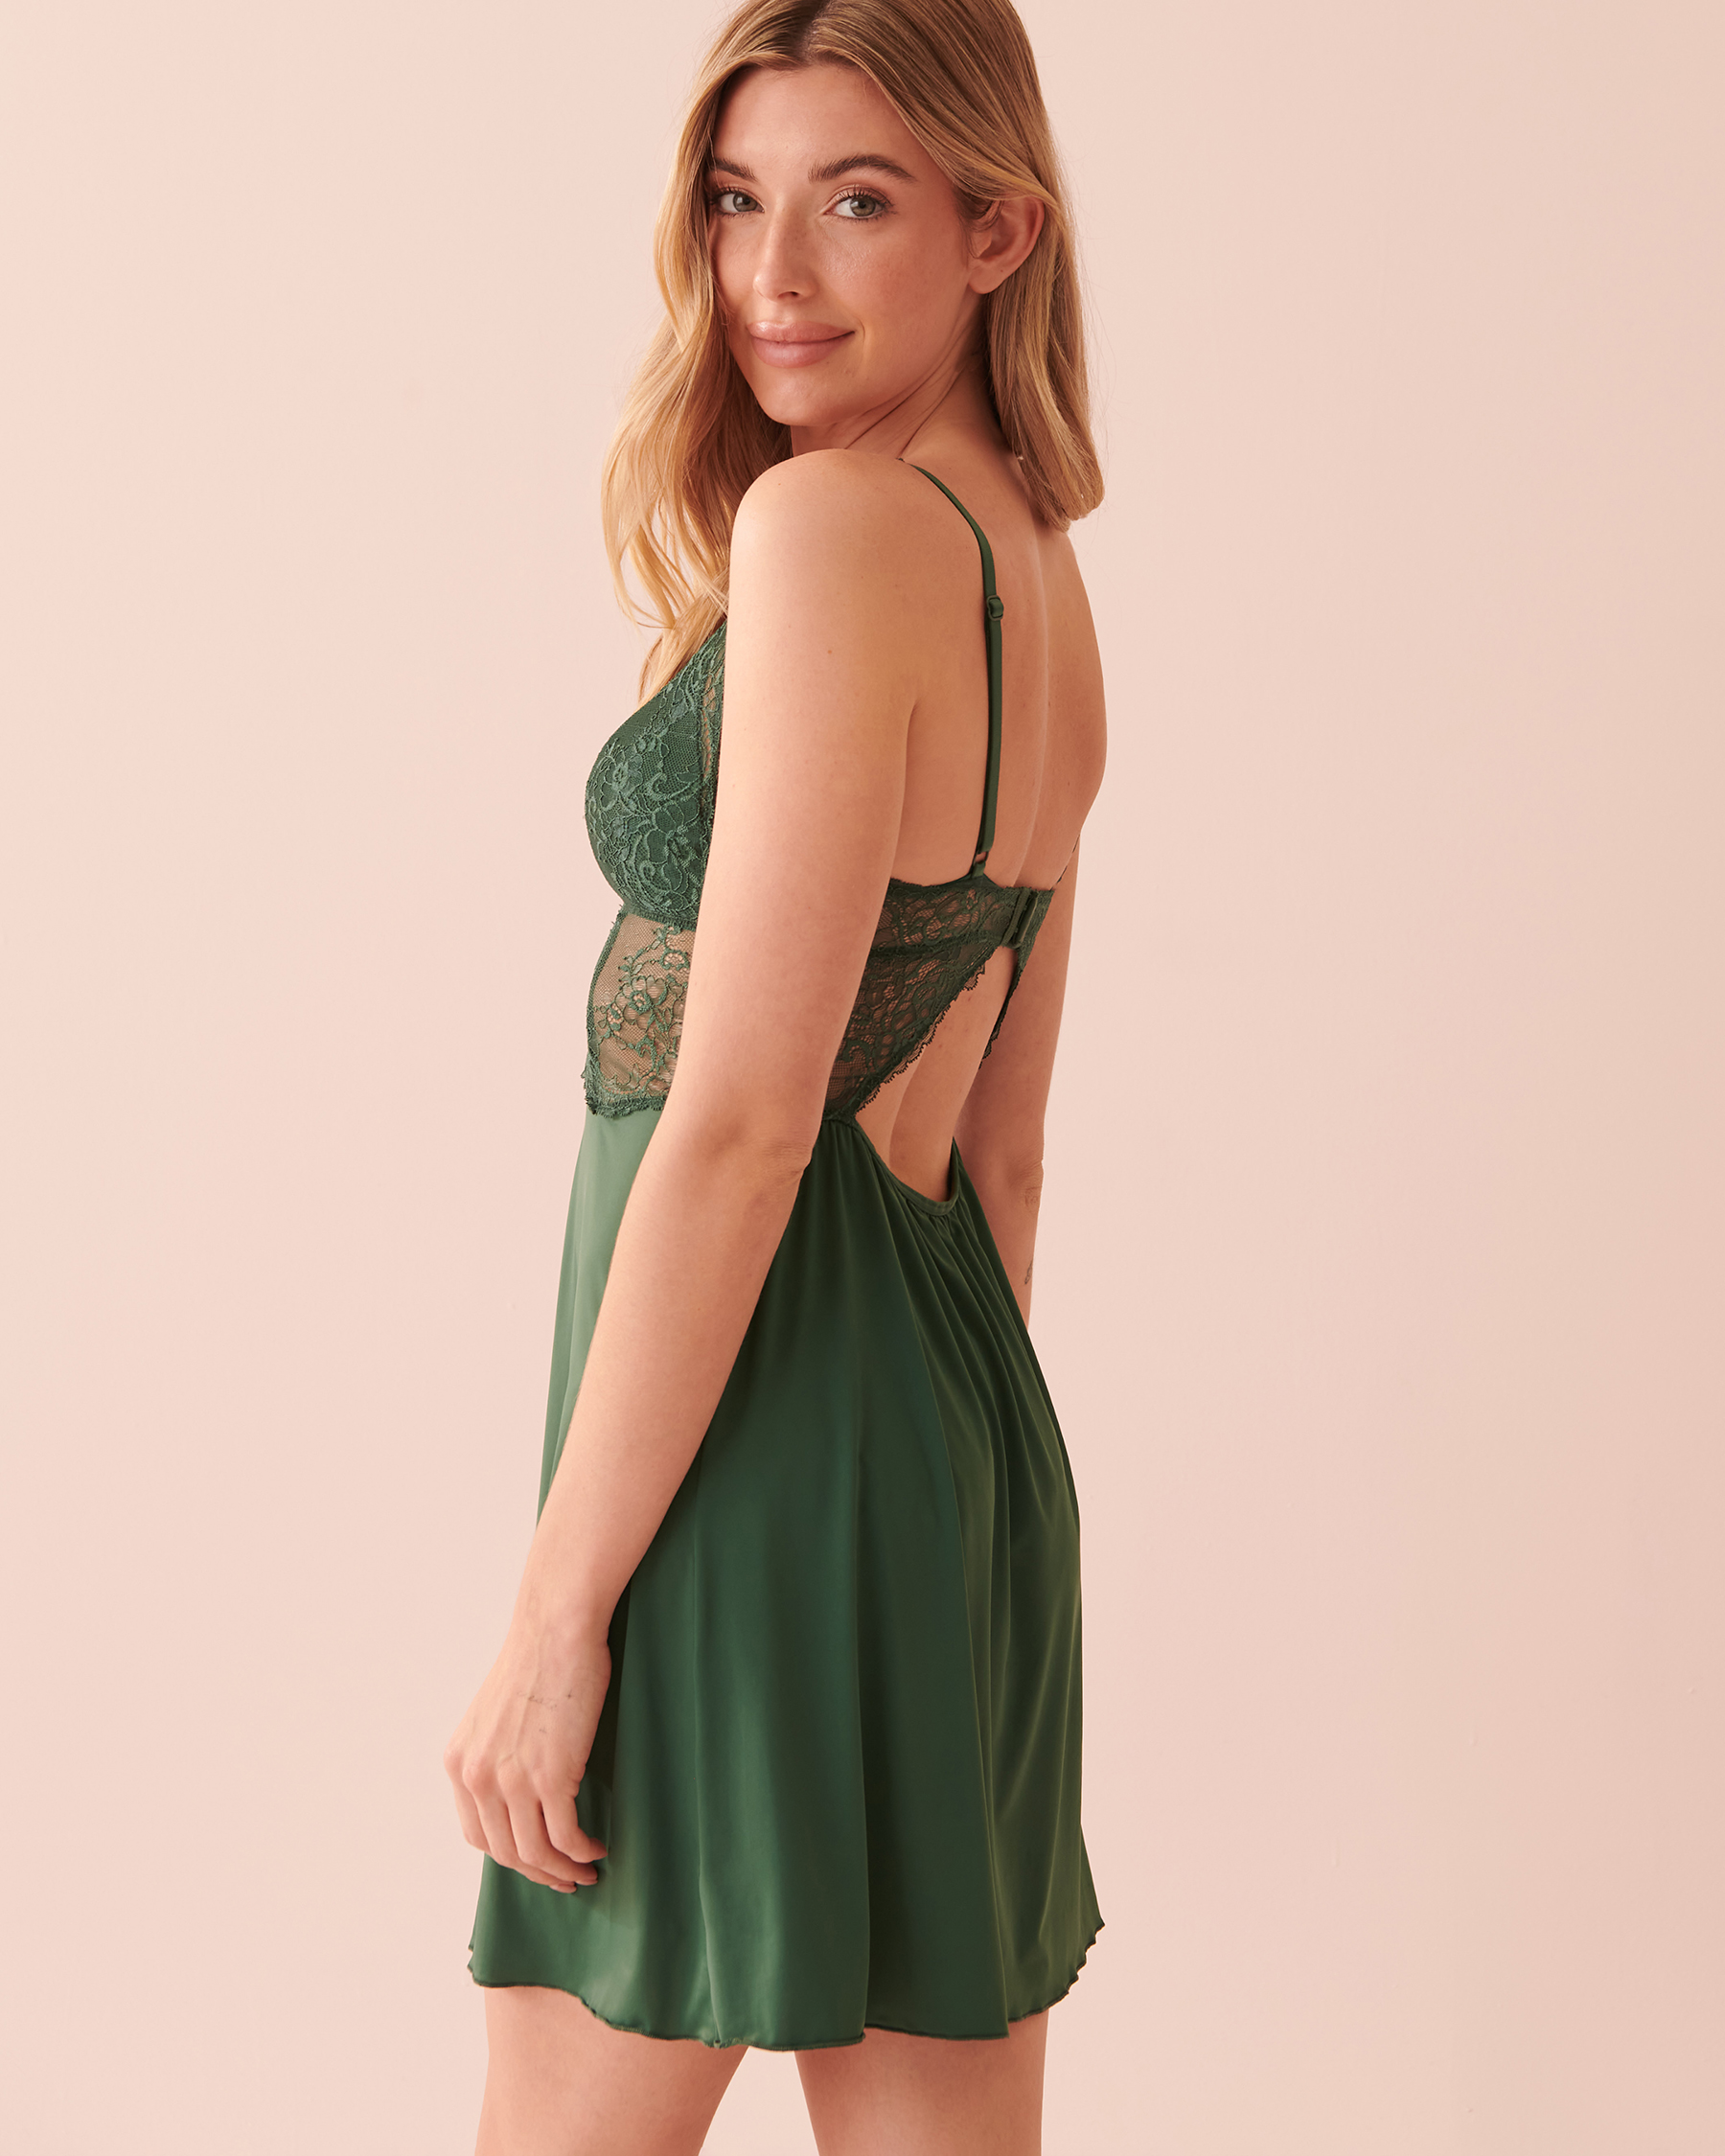 la Vie en Rose Women’s Pine Green Lace Overlay Nightie